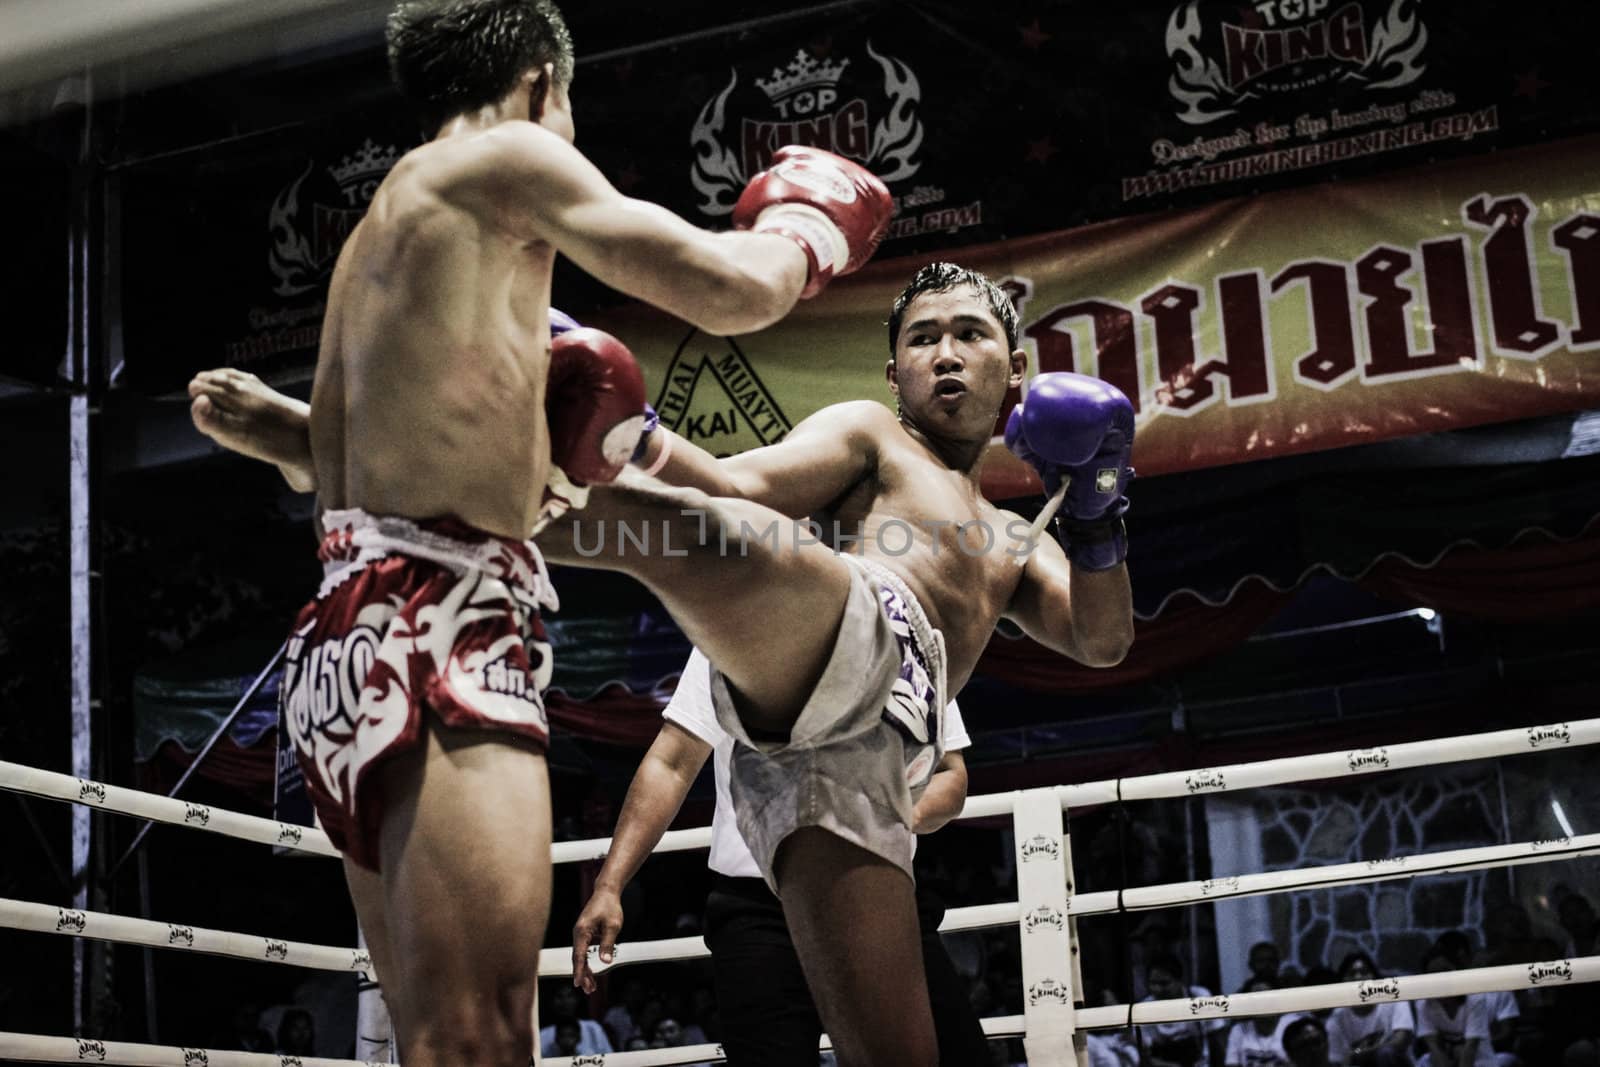 Thai boxing in Thailand